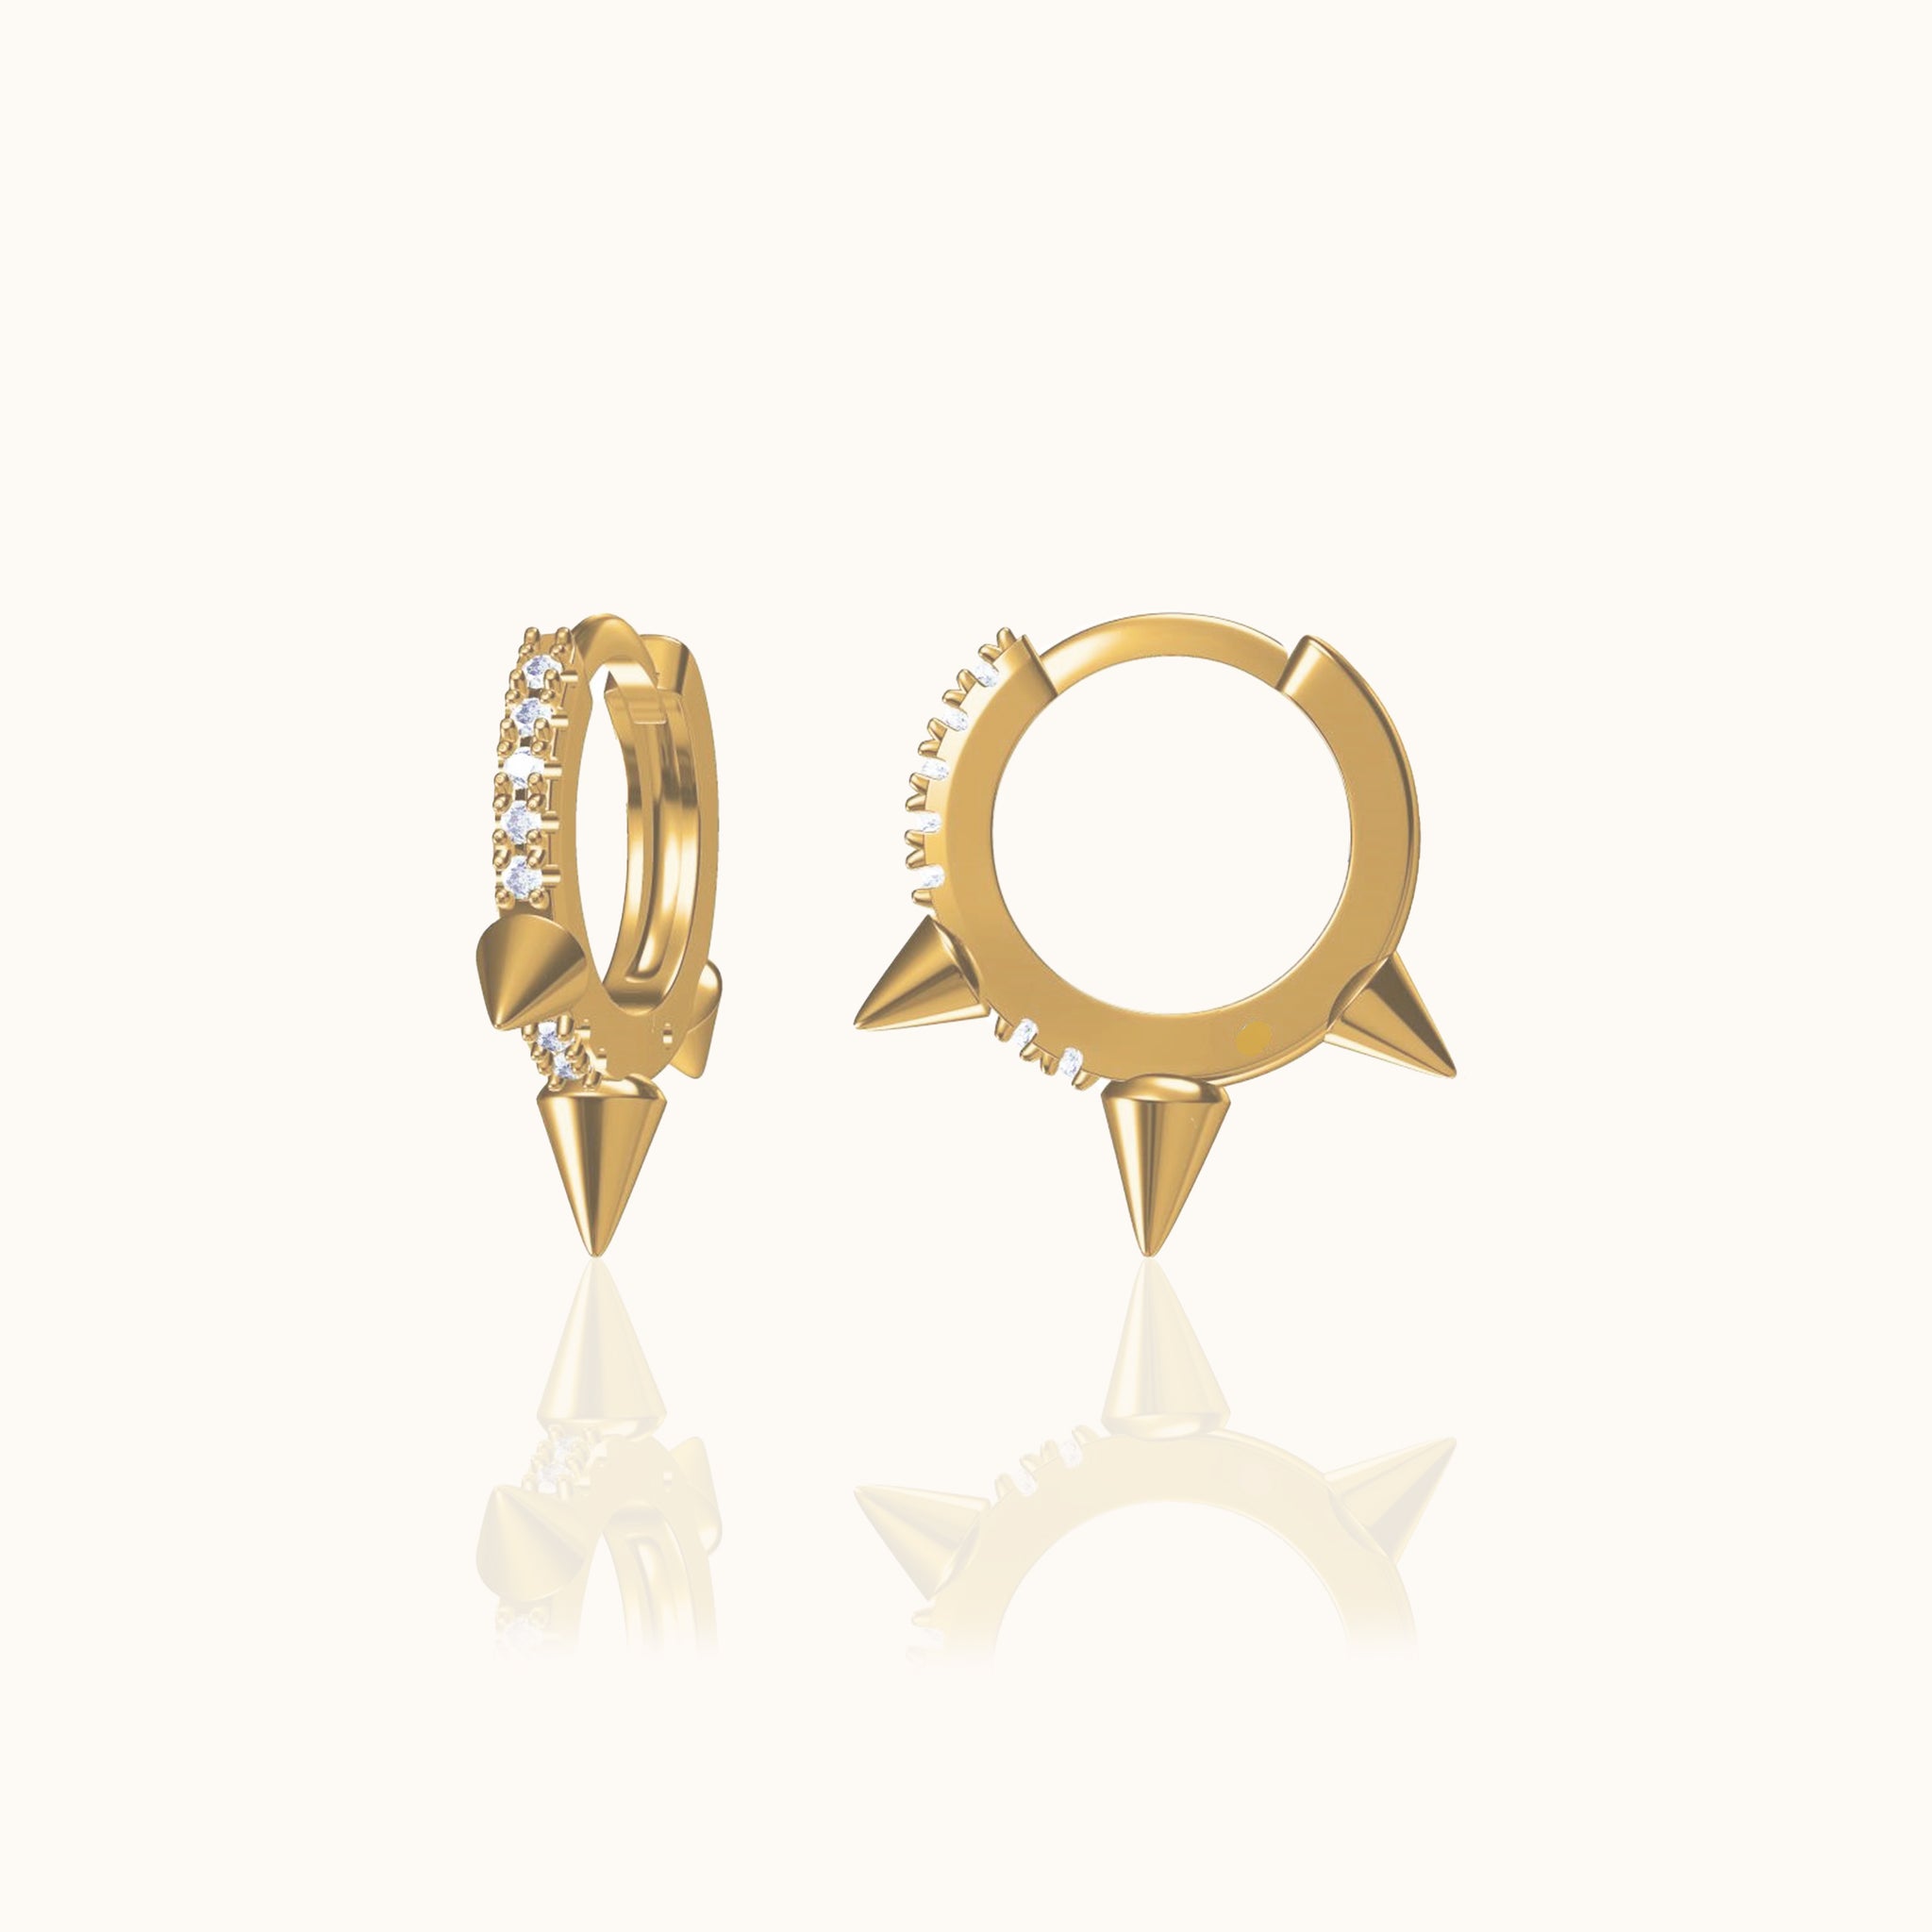 Petite Triple Spikes Huggie Hoops Tiny Gold Spike CZ Hoop Earrings by Doviana